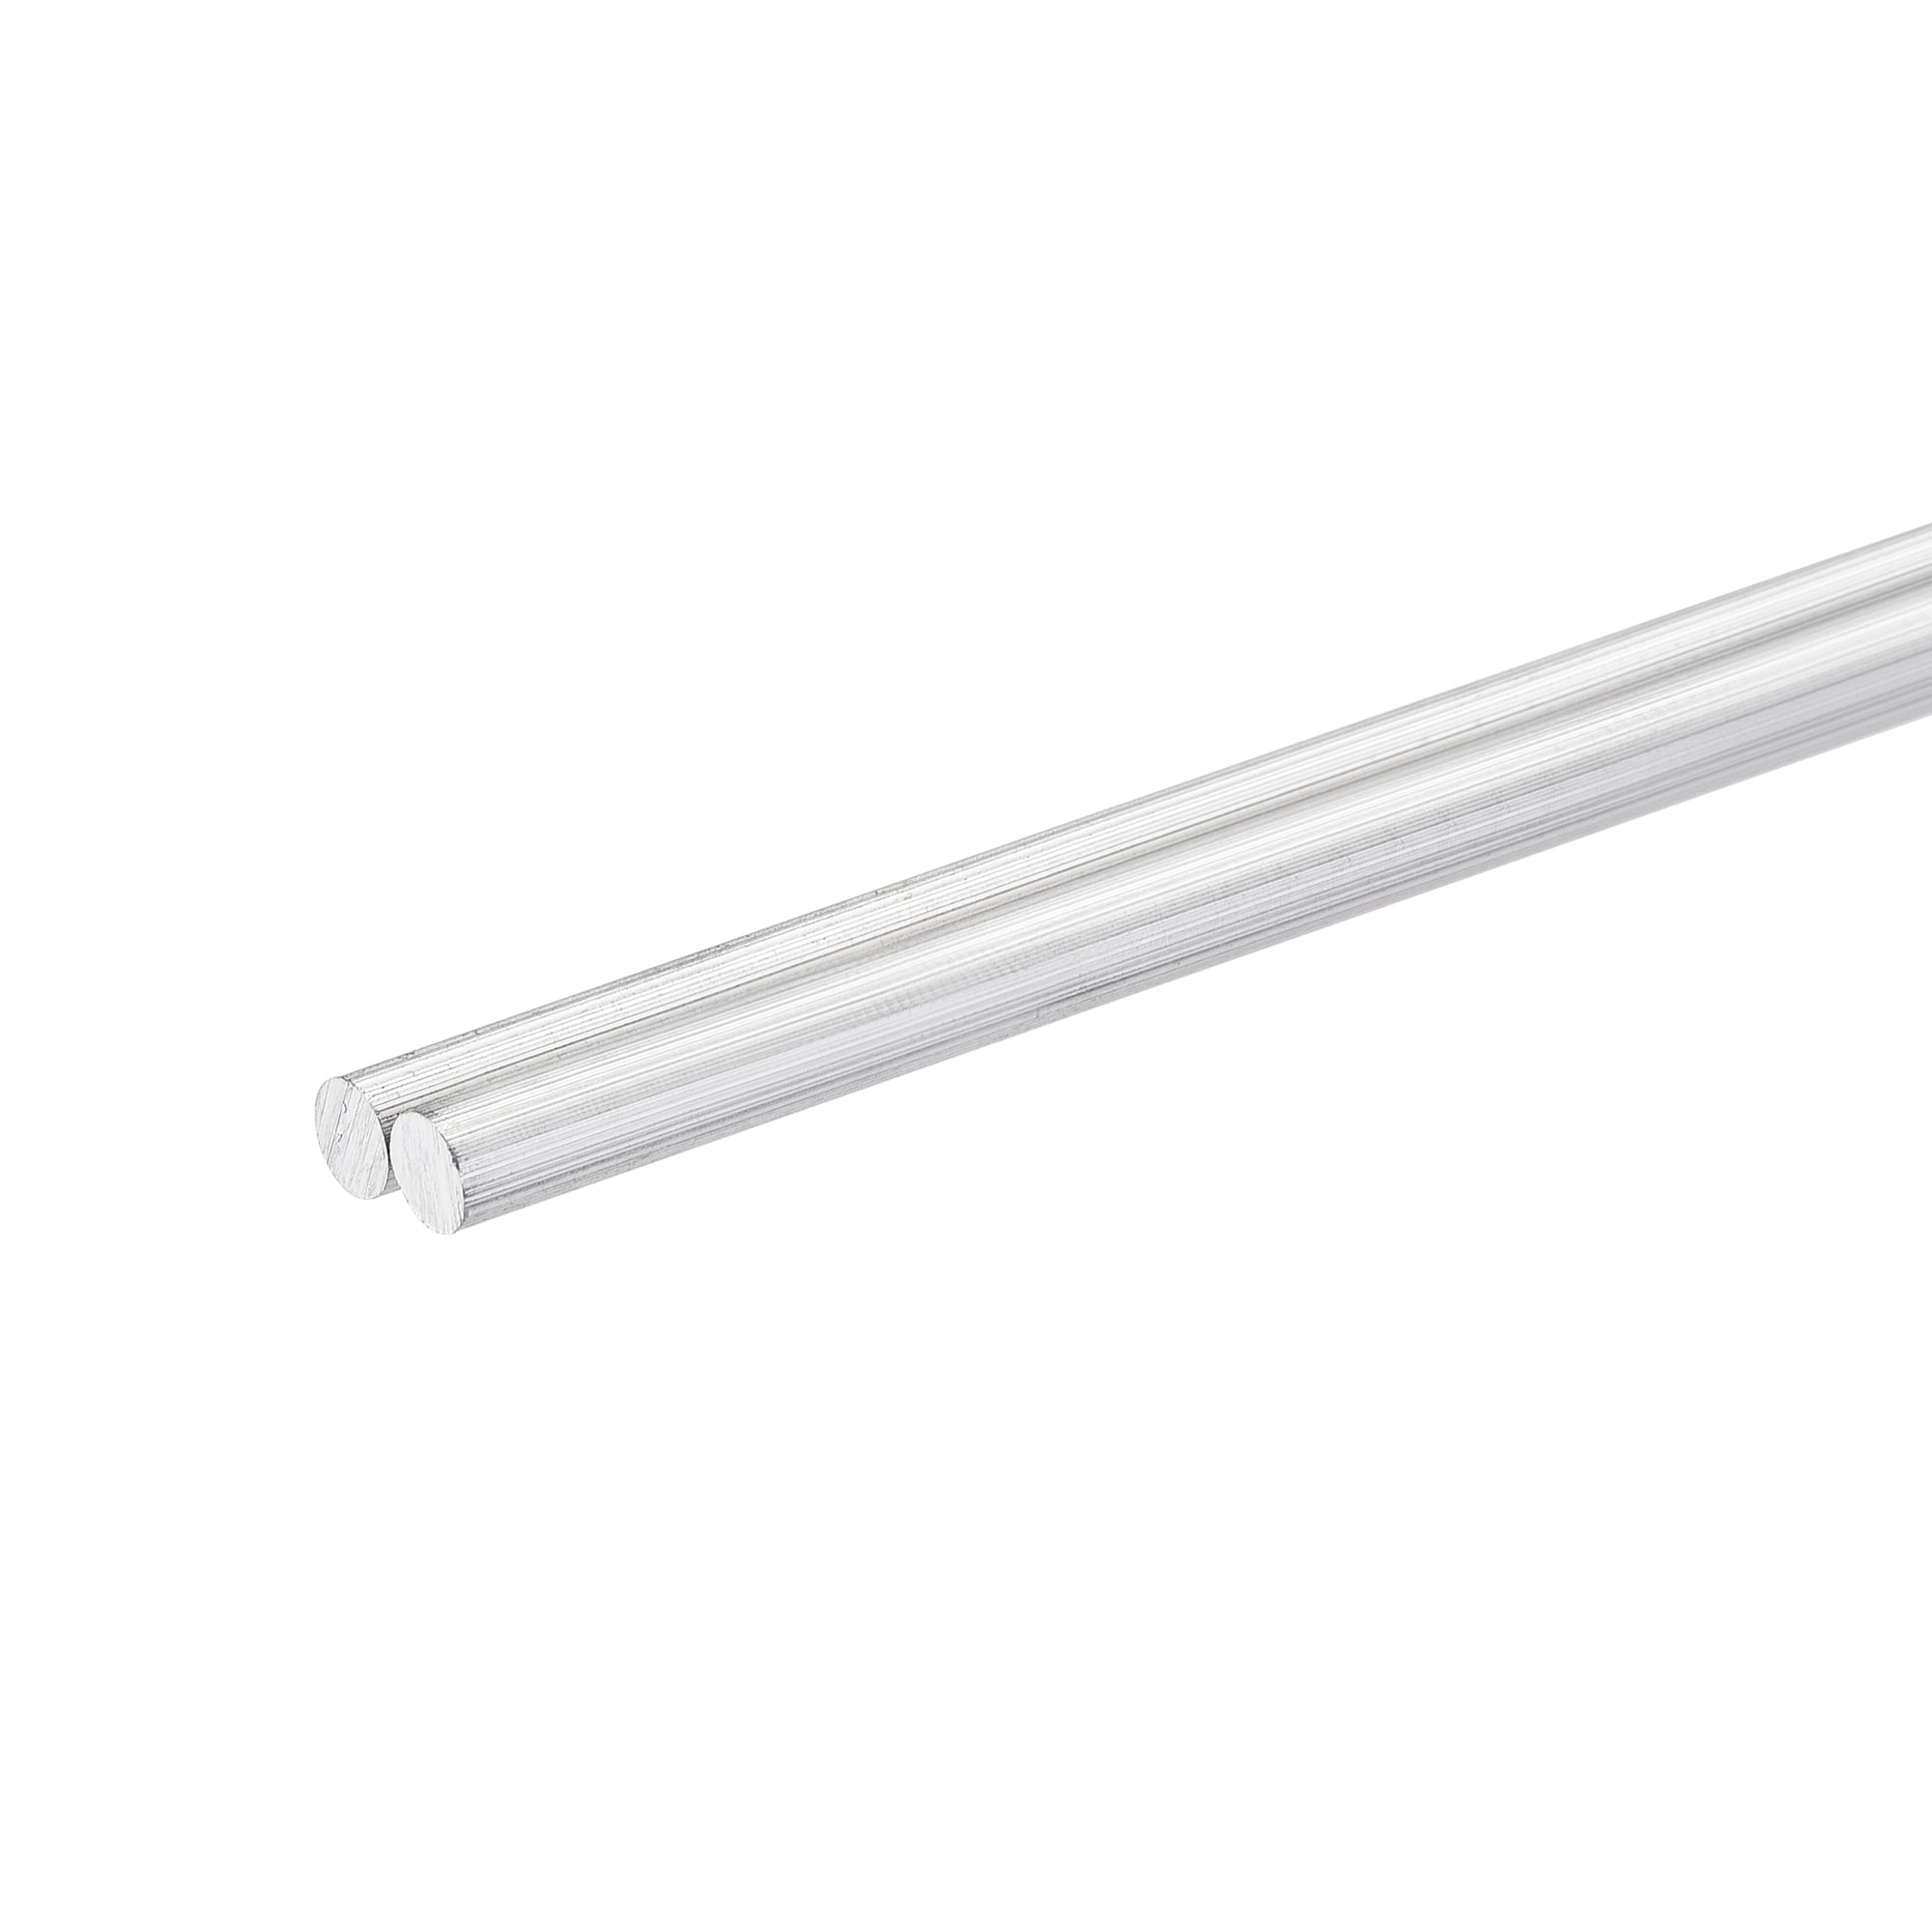 MECCANIXITY Aluminum Solid Round Rod 12mm Diameter 300mm Length Lathe Bar Stock for DIY Craft Pack of 1Pcs 